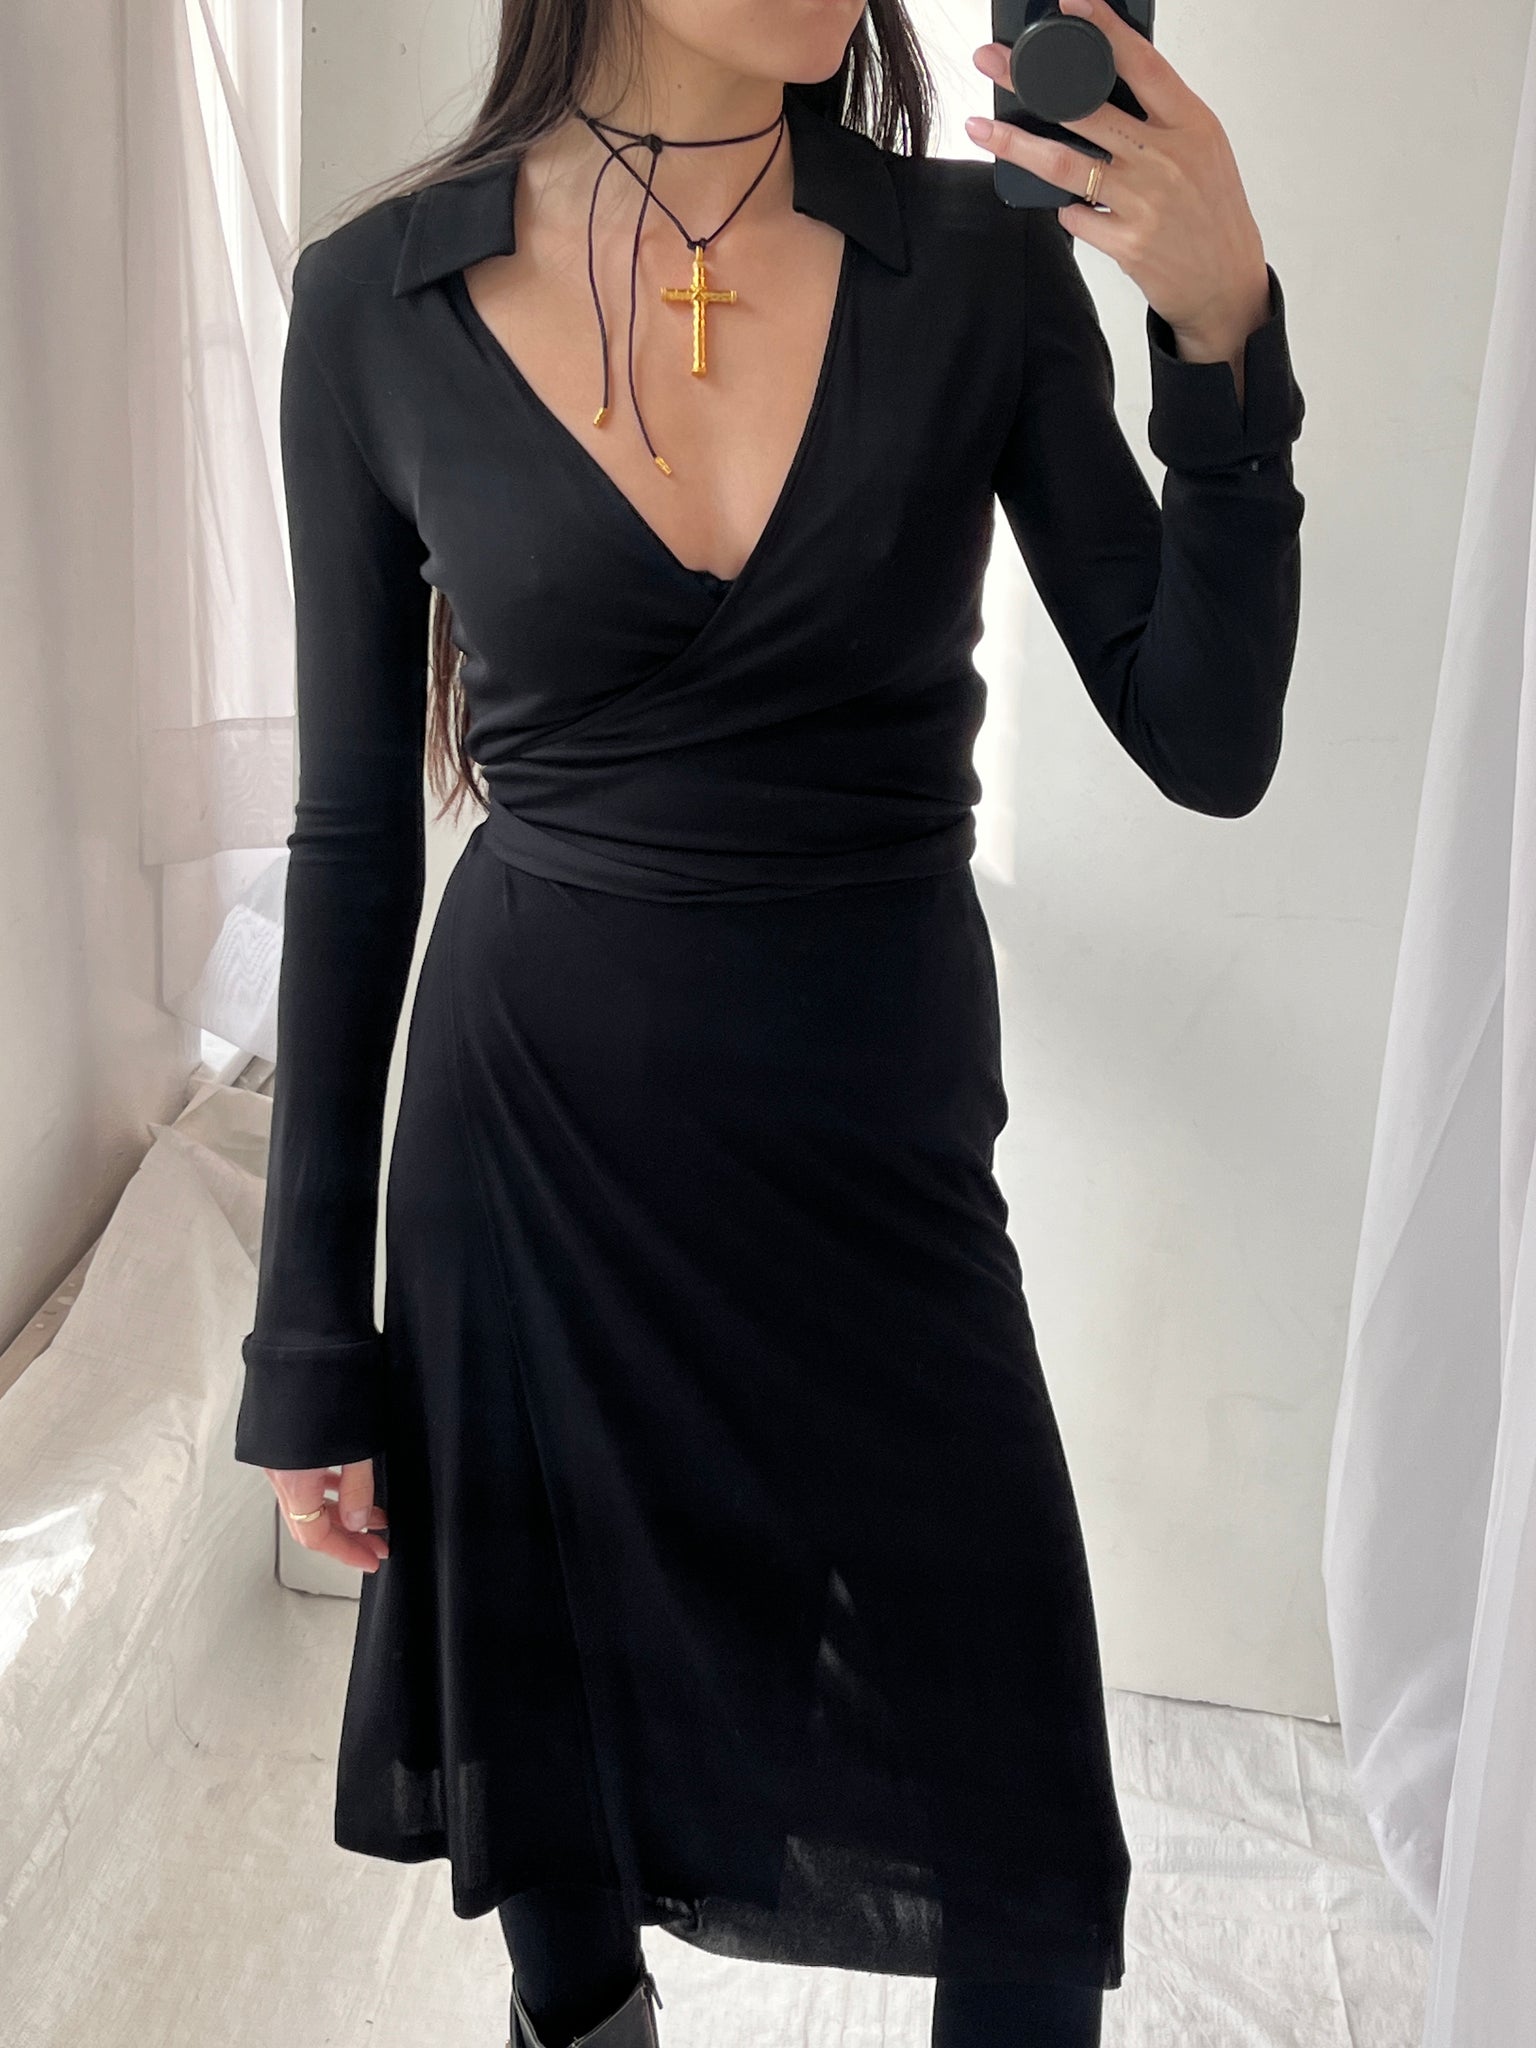 Iconic DVF Black Wrap Midi Dress